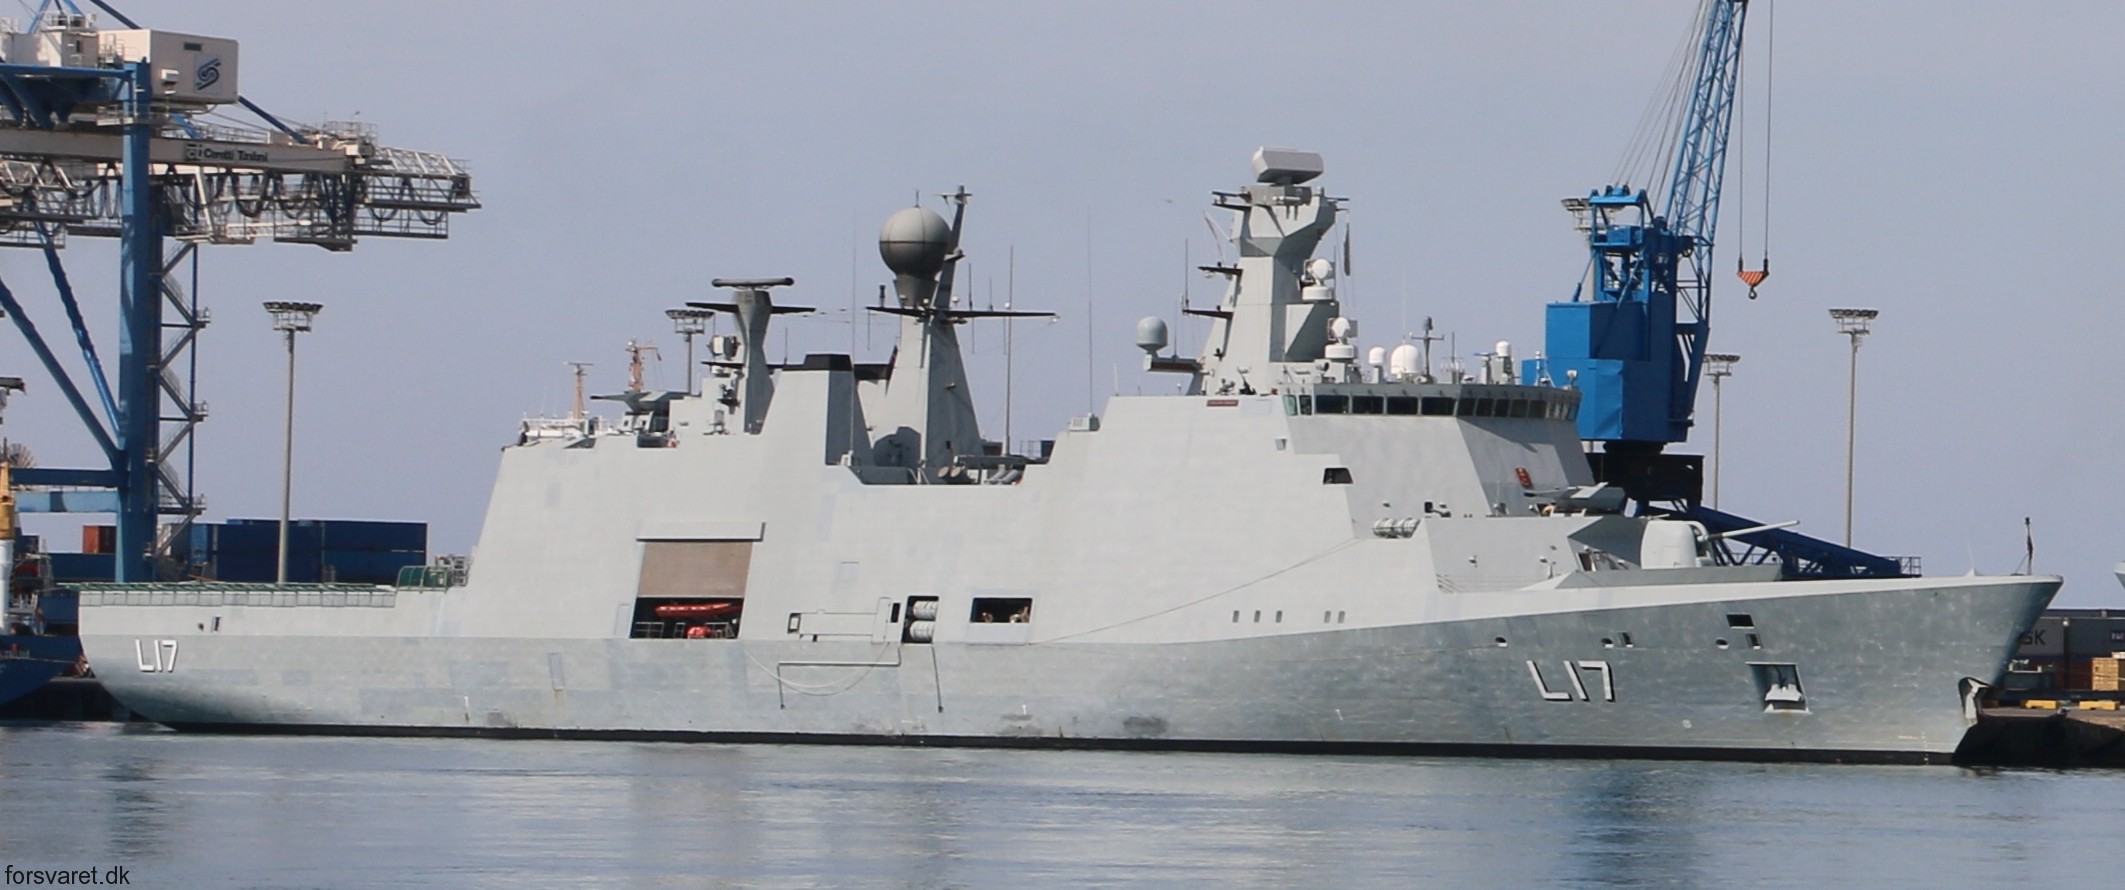 f-342 hdms esbern snare l-17 frigate command support ship royal danish navy 74